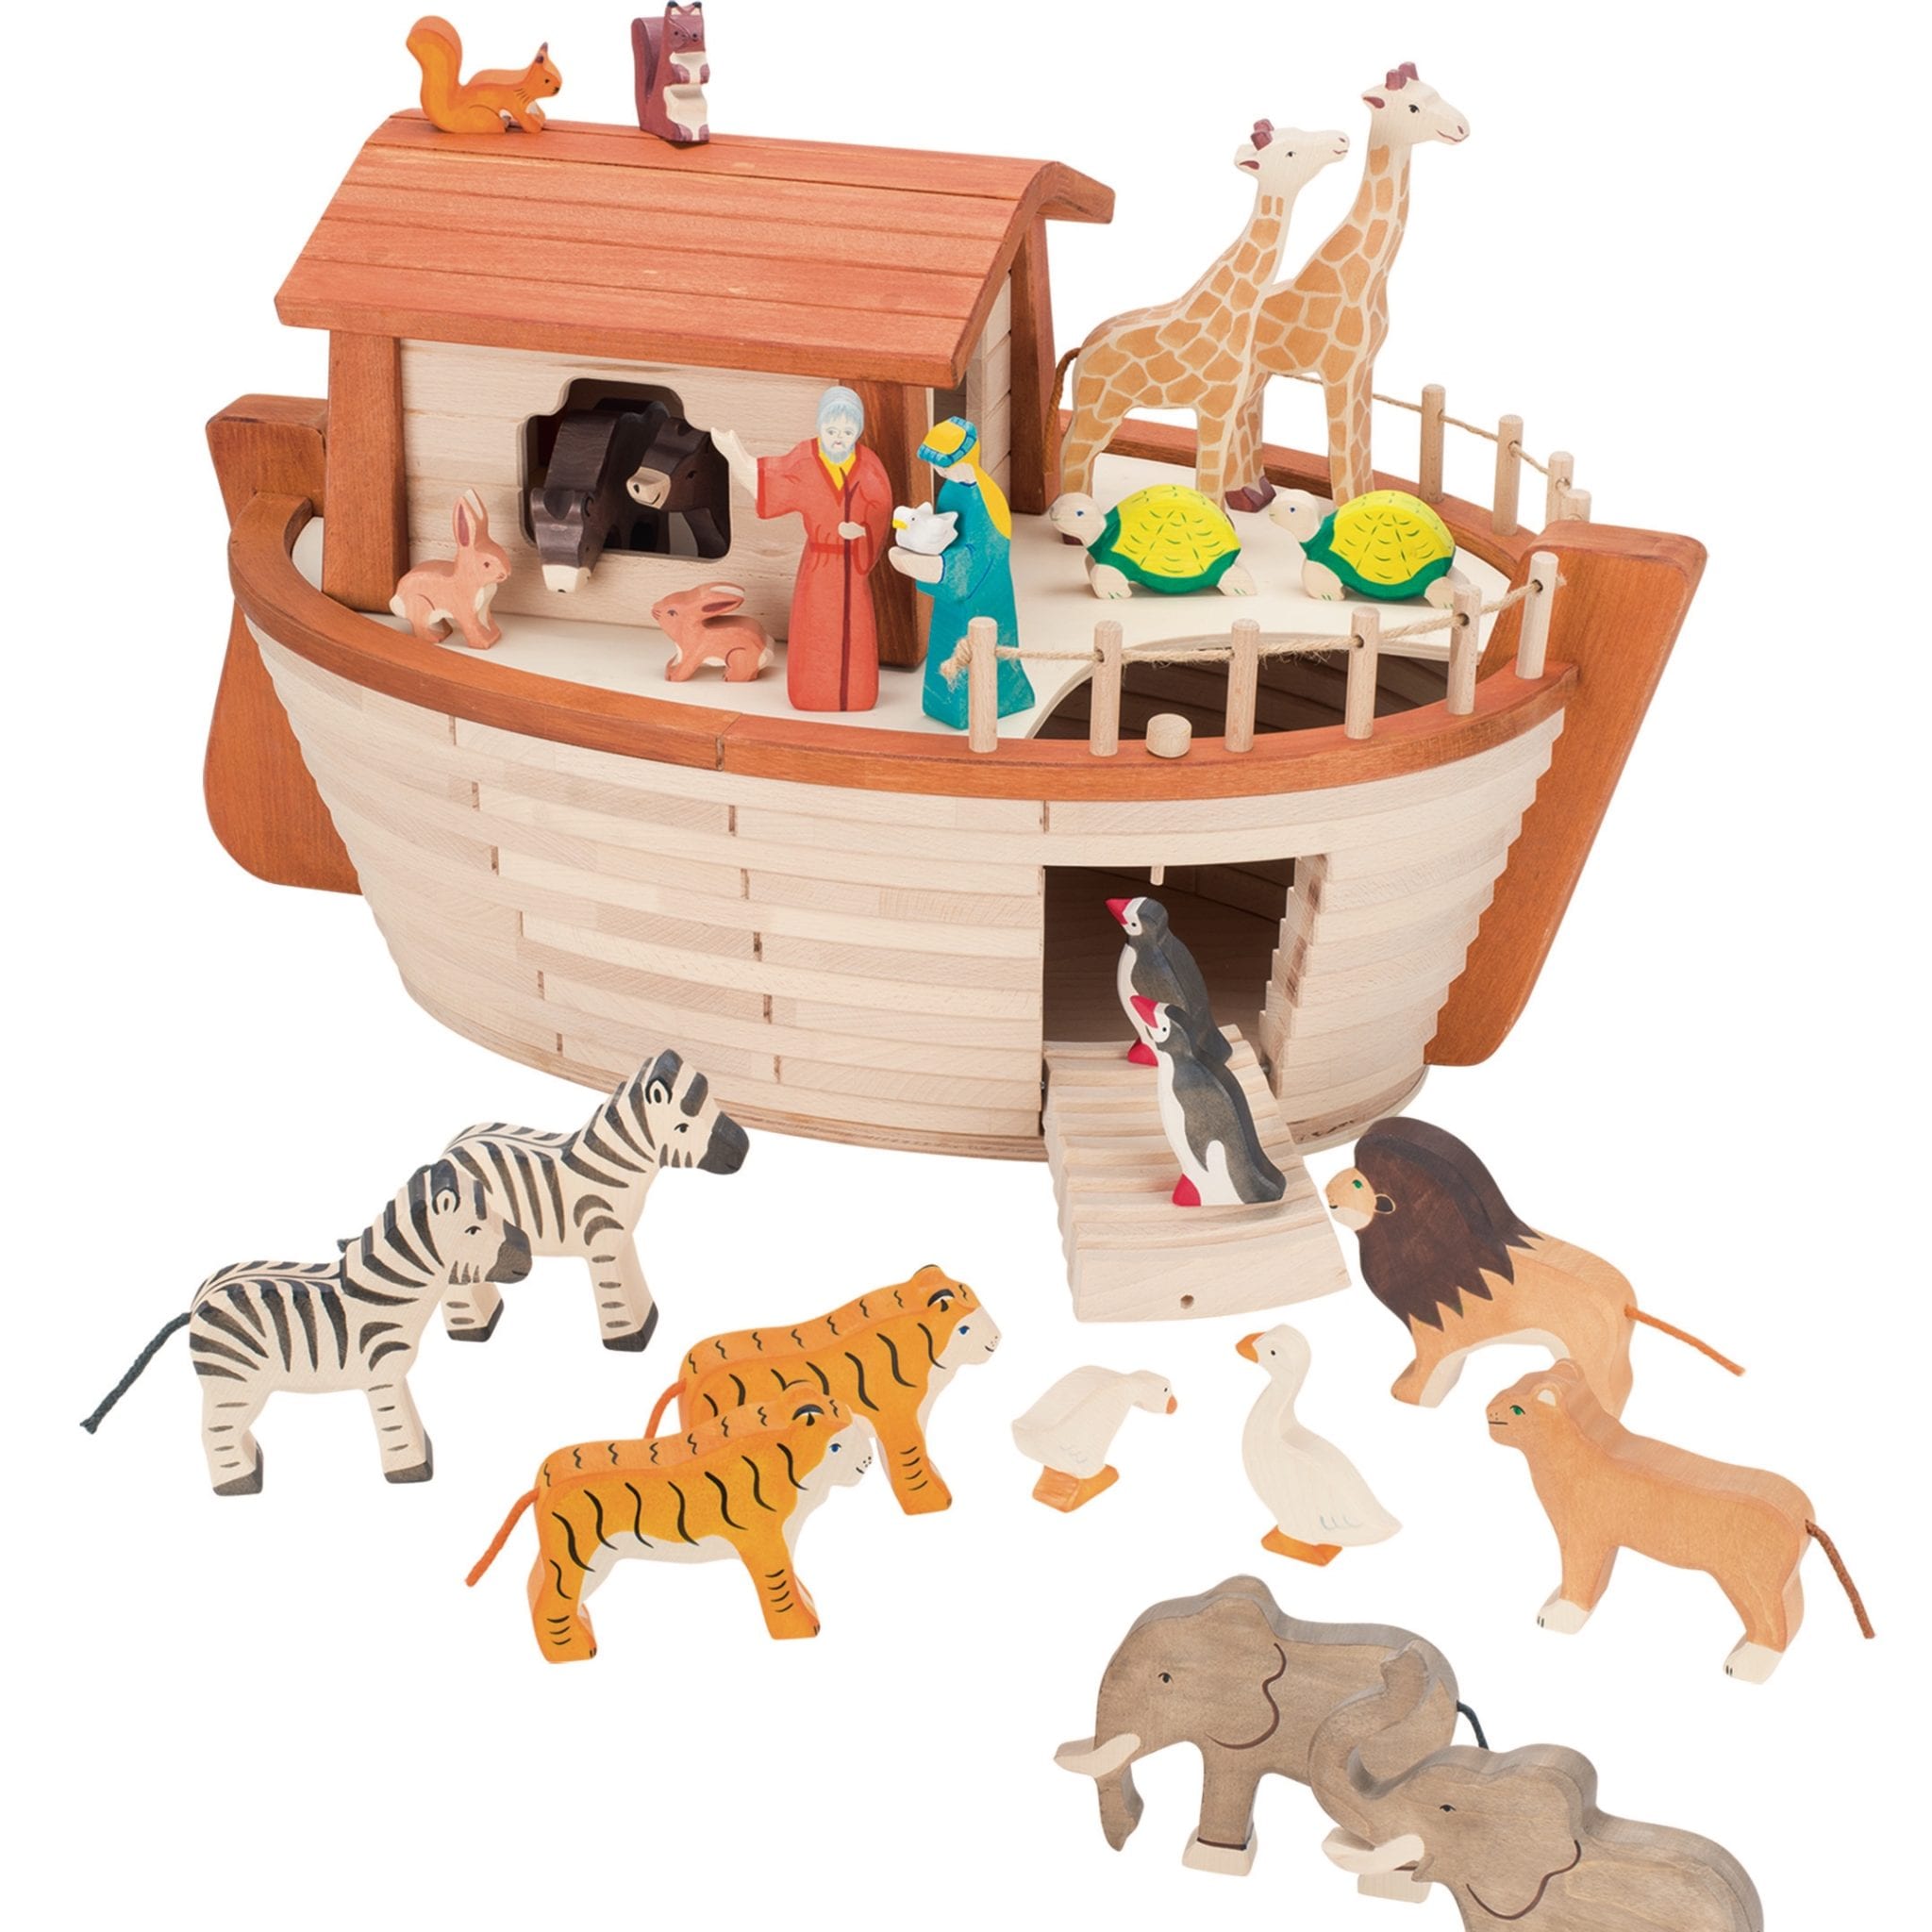 Holztiger Wooden Toy - Noah's Ark 